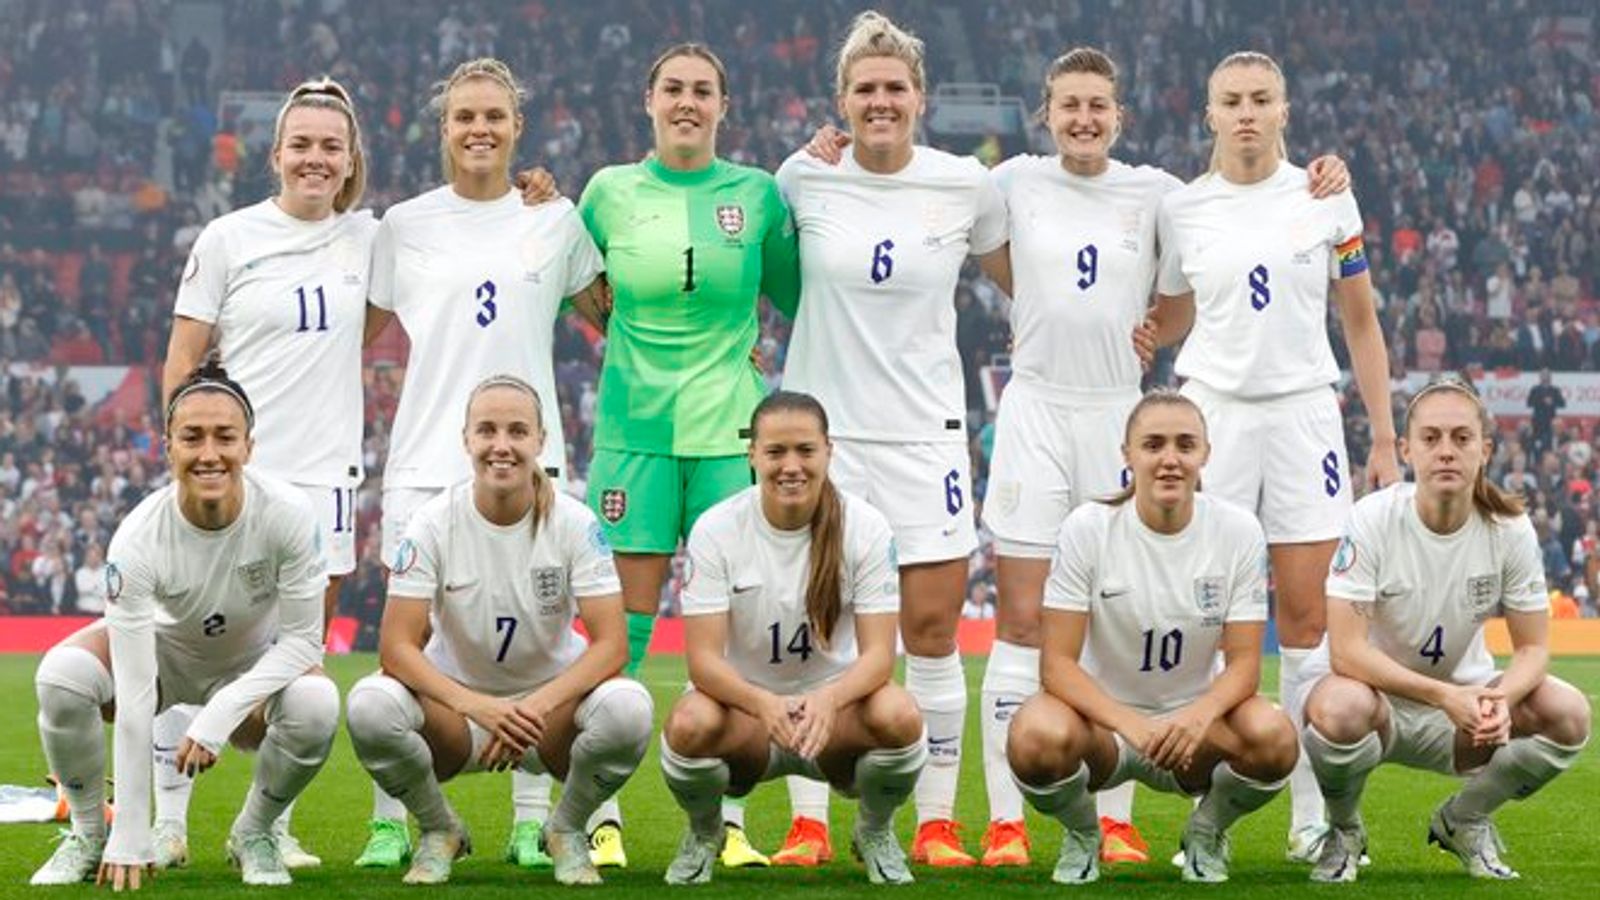 Tanya Clarke England Women's National Football Team Twitter